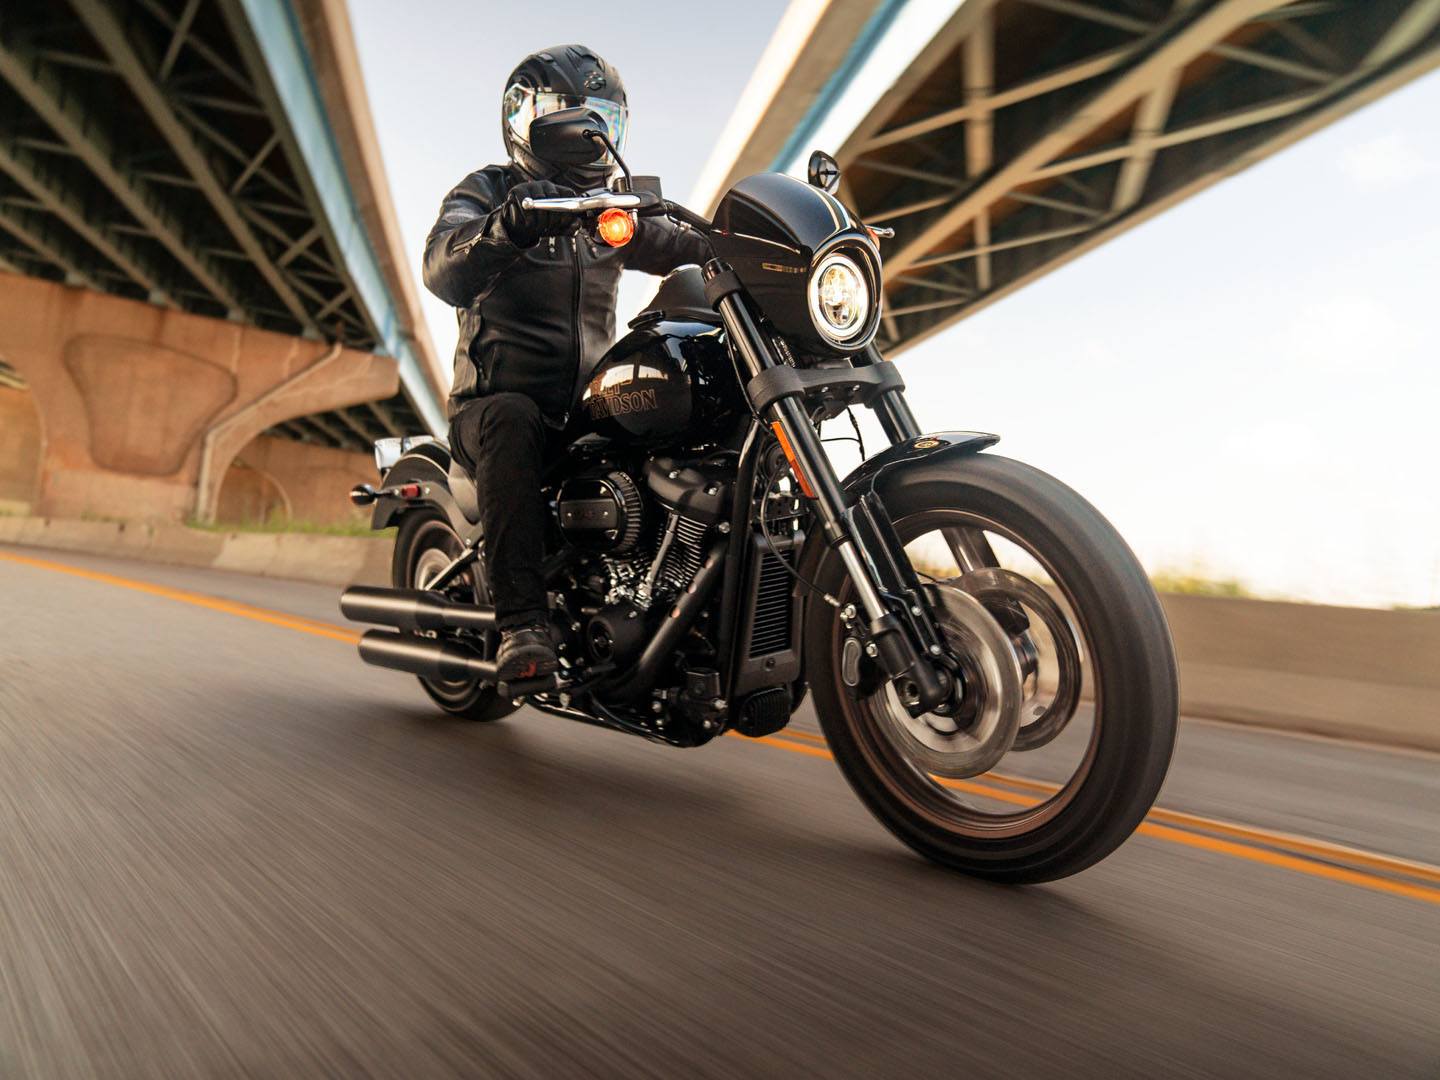 2021 Harley-Davidson Low Rider®S in Baldwin Park, California - Photo 16